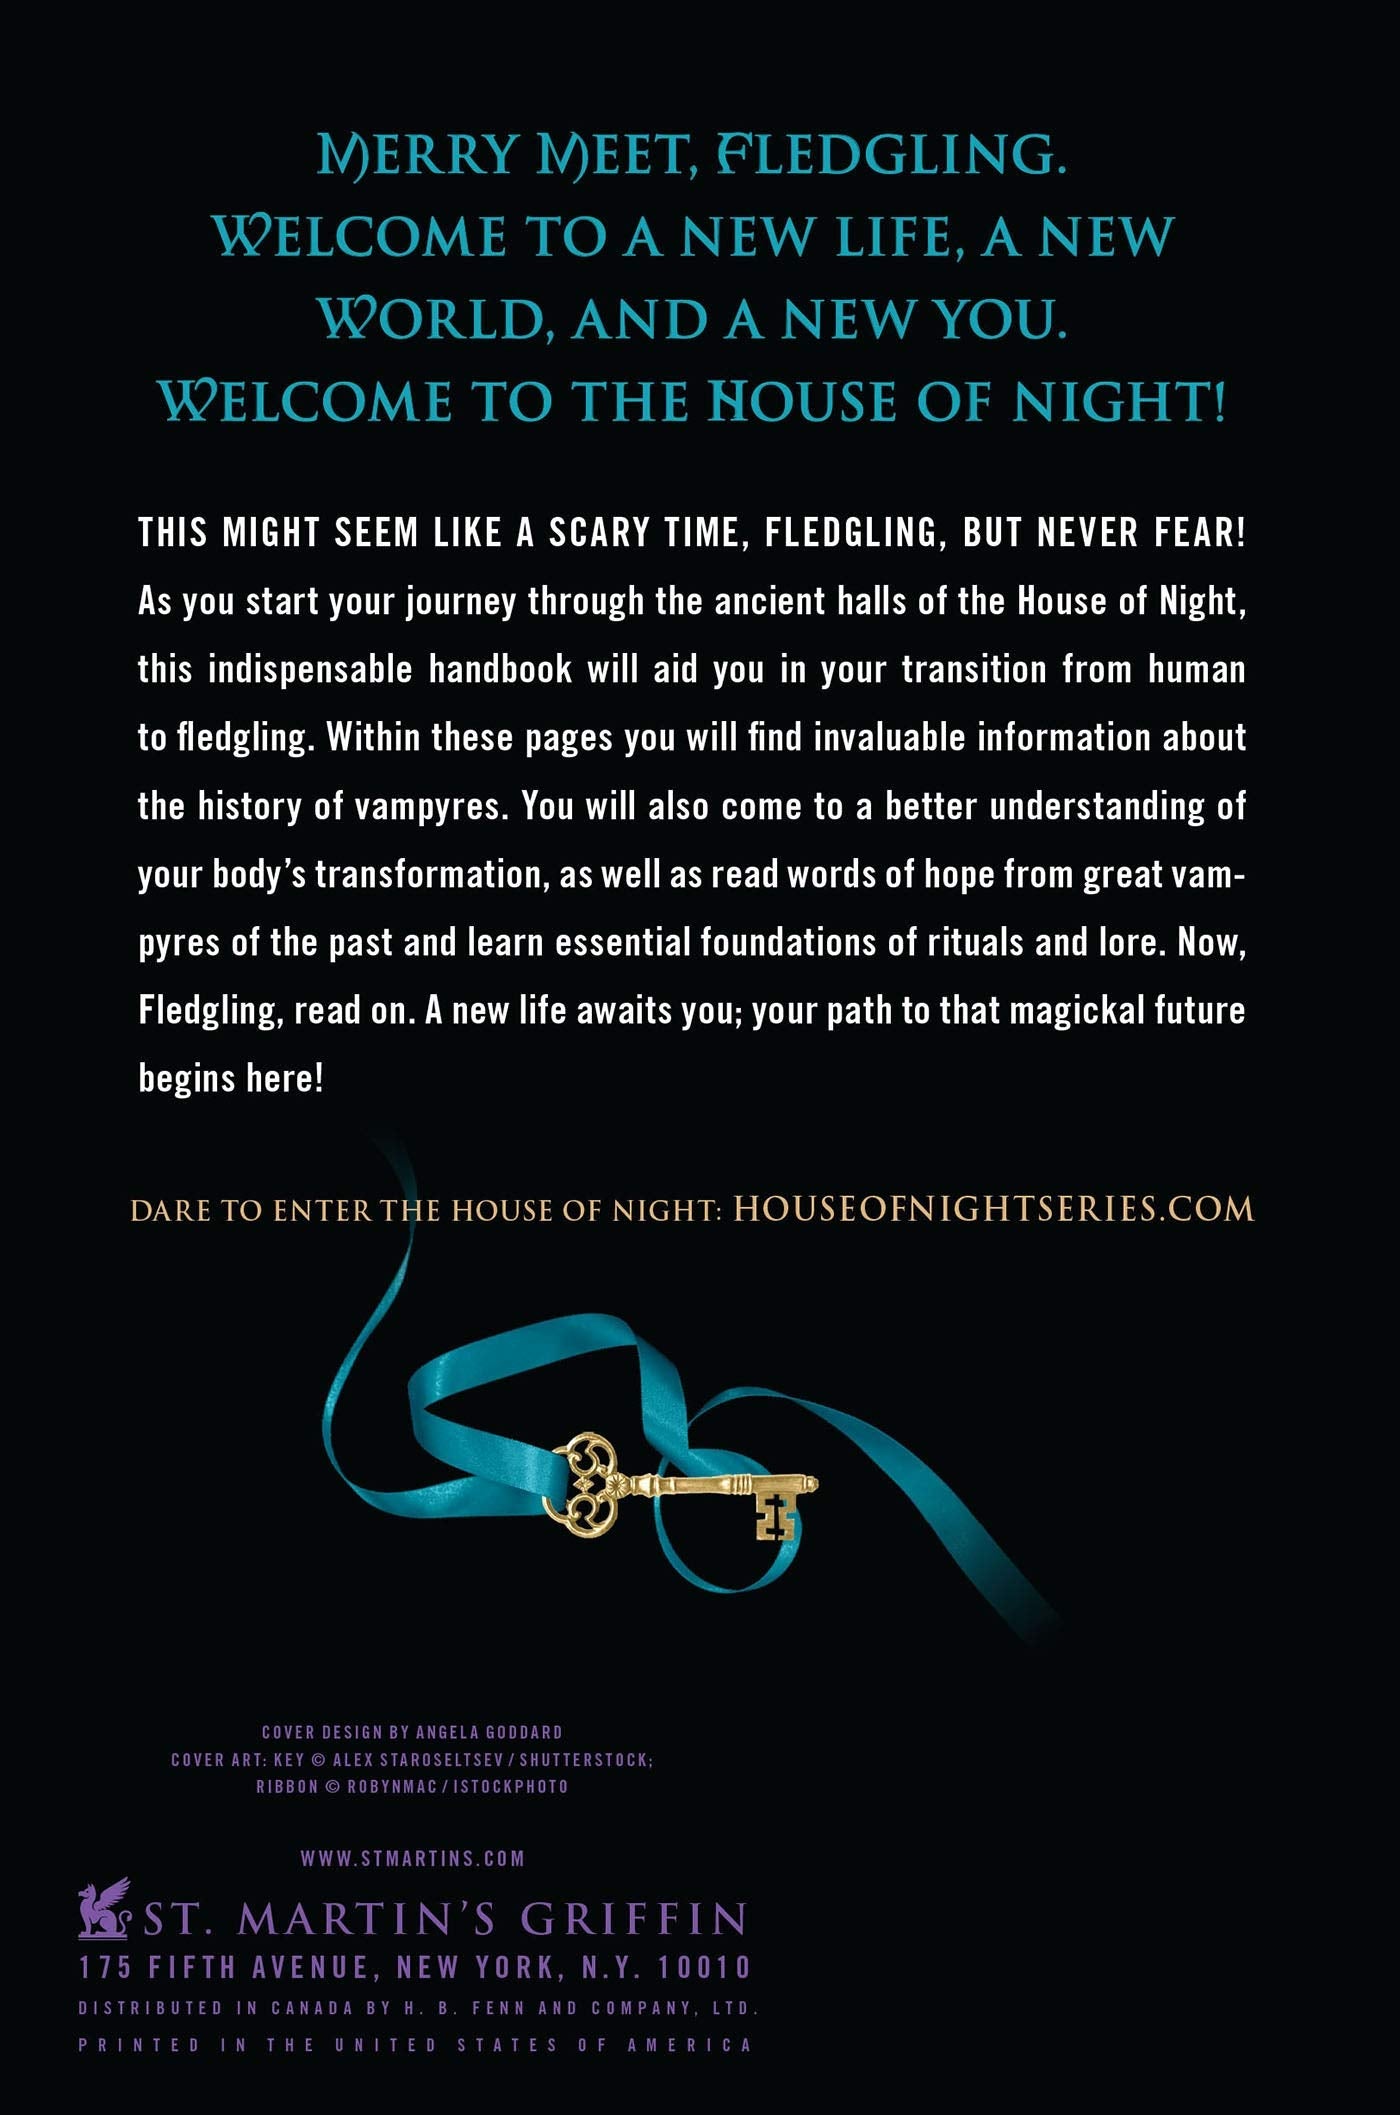 House of Night : The Fledgling Handbook 101 (P.C. Cast)